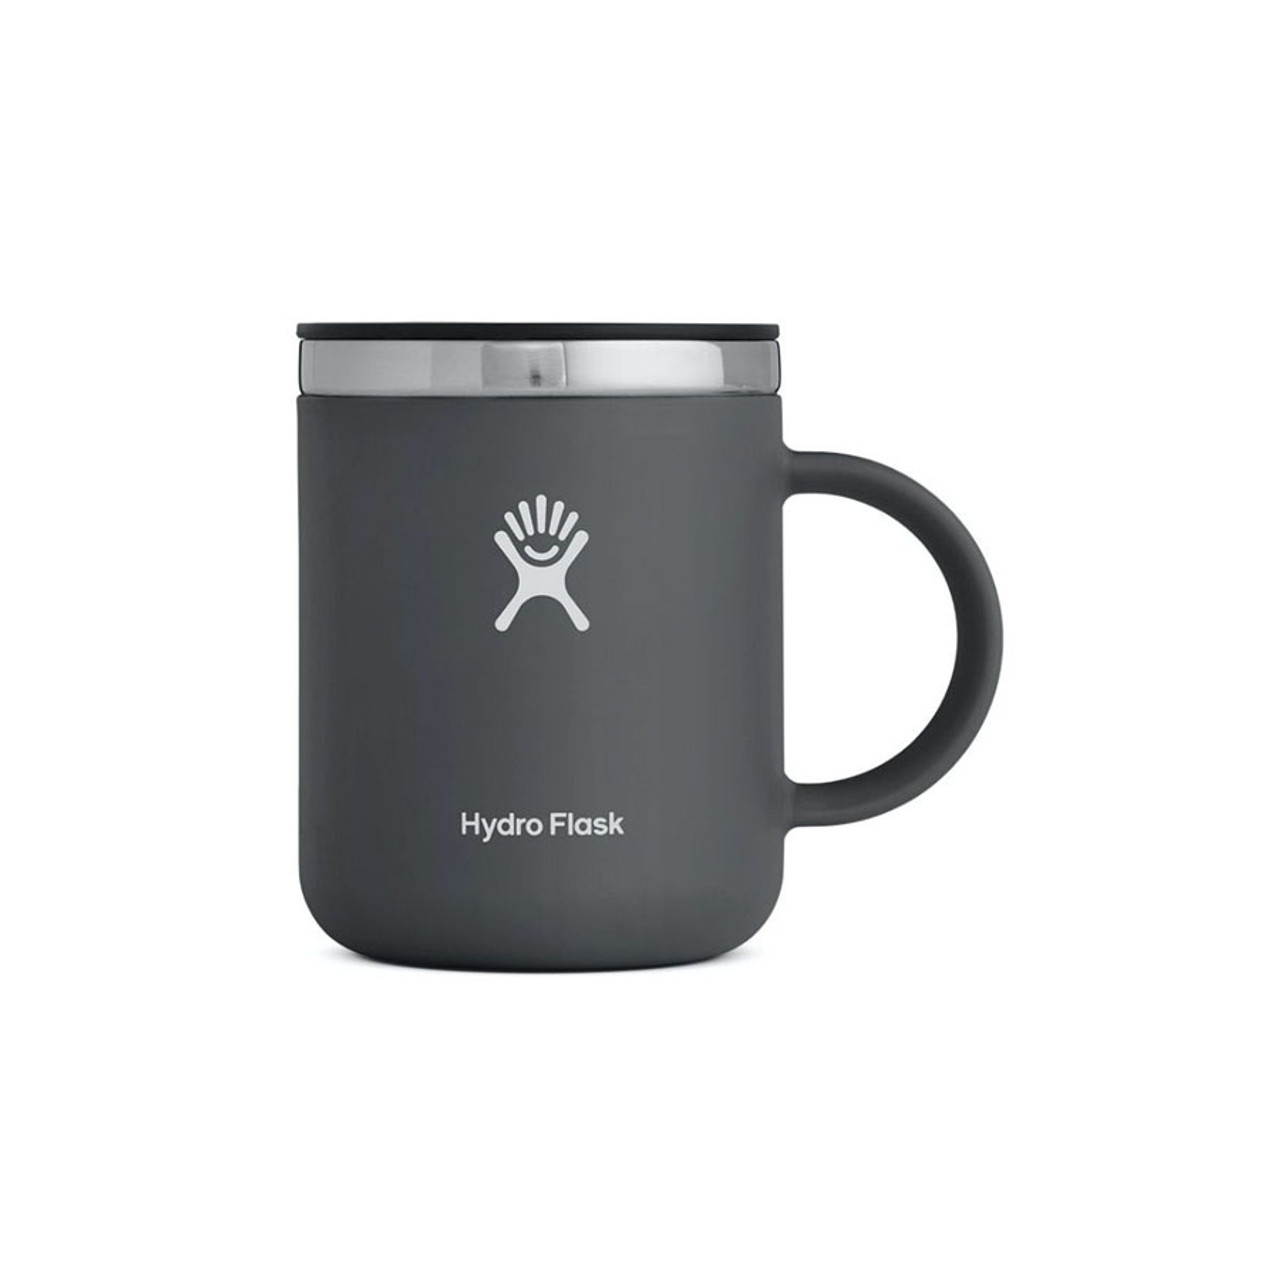 Hydro Flask Coffee Mug Coffee & Tea Accessories